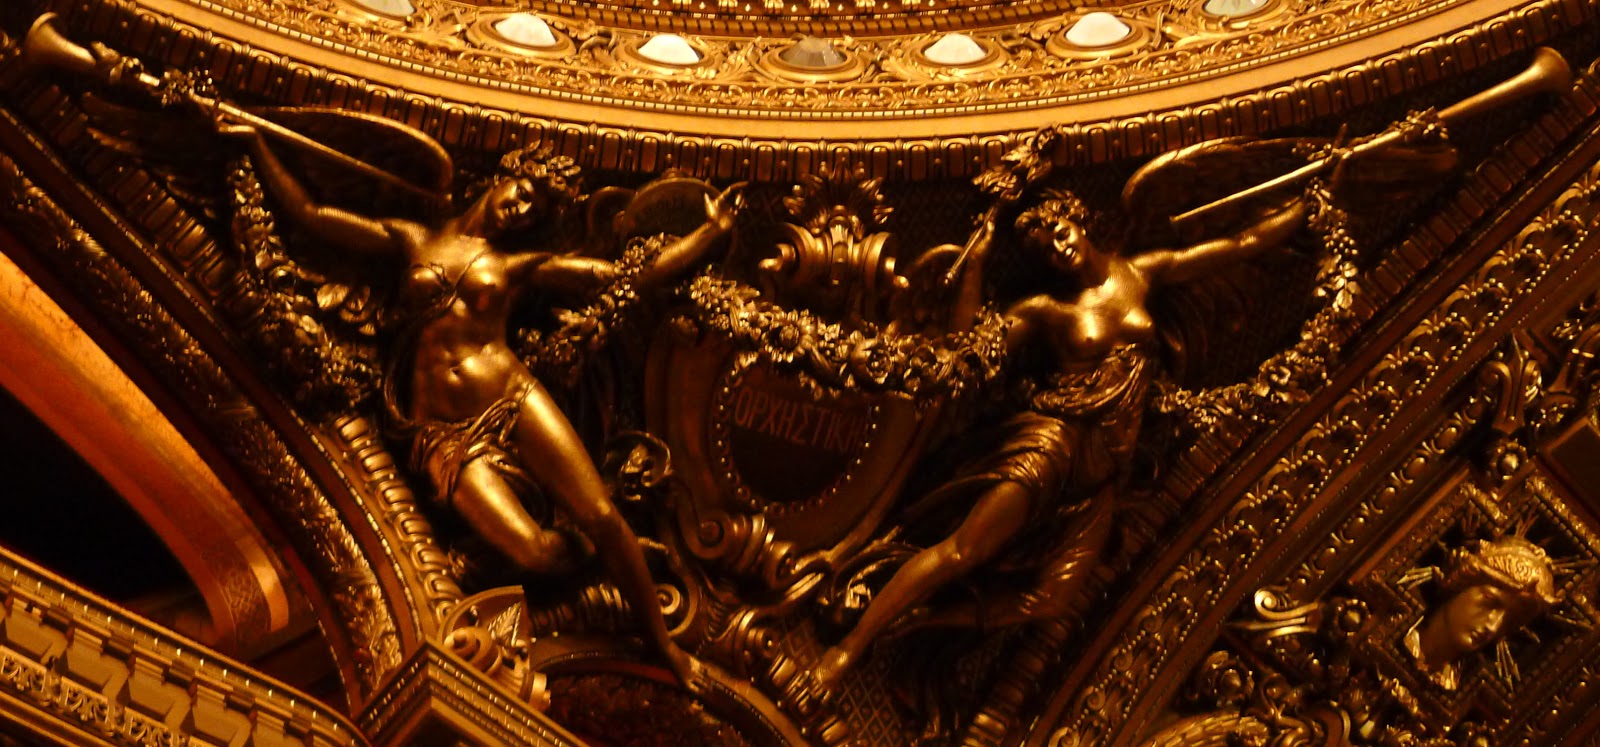 Over-the-Top Opulence - The Palais Garnier